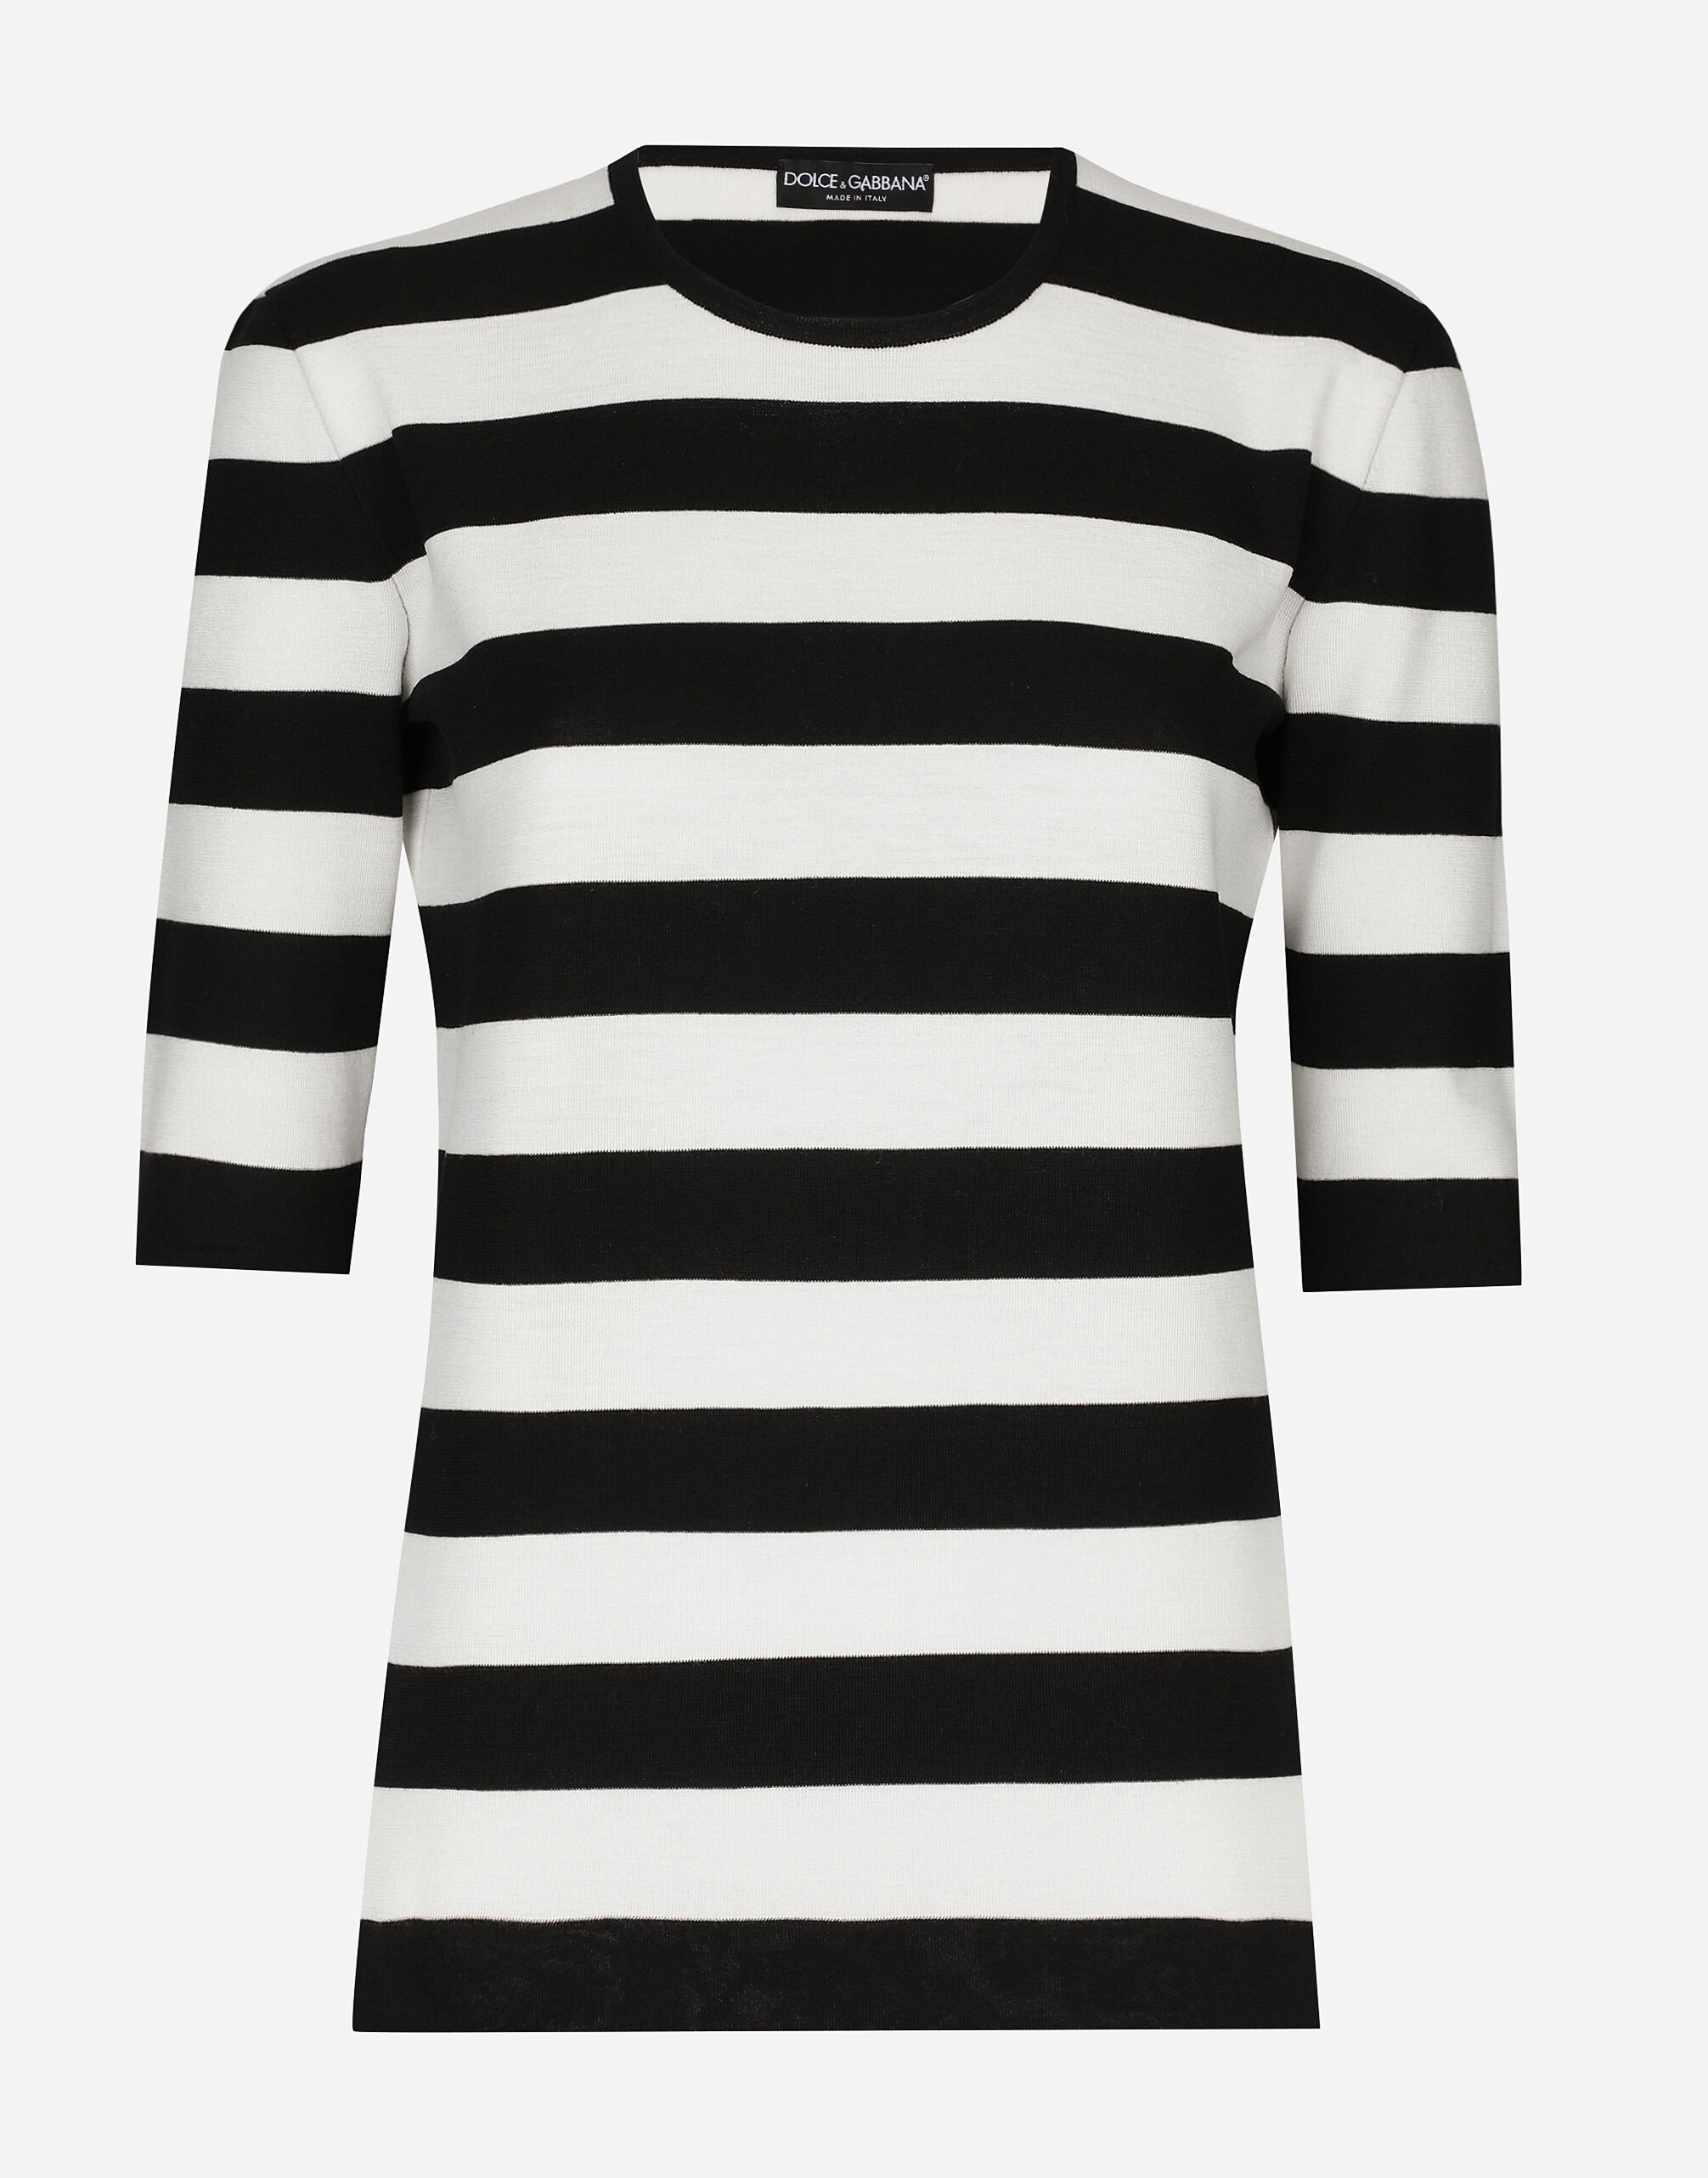 Dolce & Gabbana Wool sweater in inlaid stripes White FXW12TJFMEB